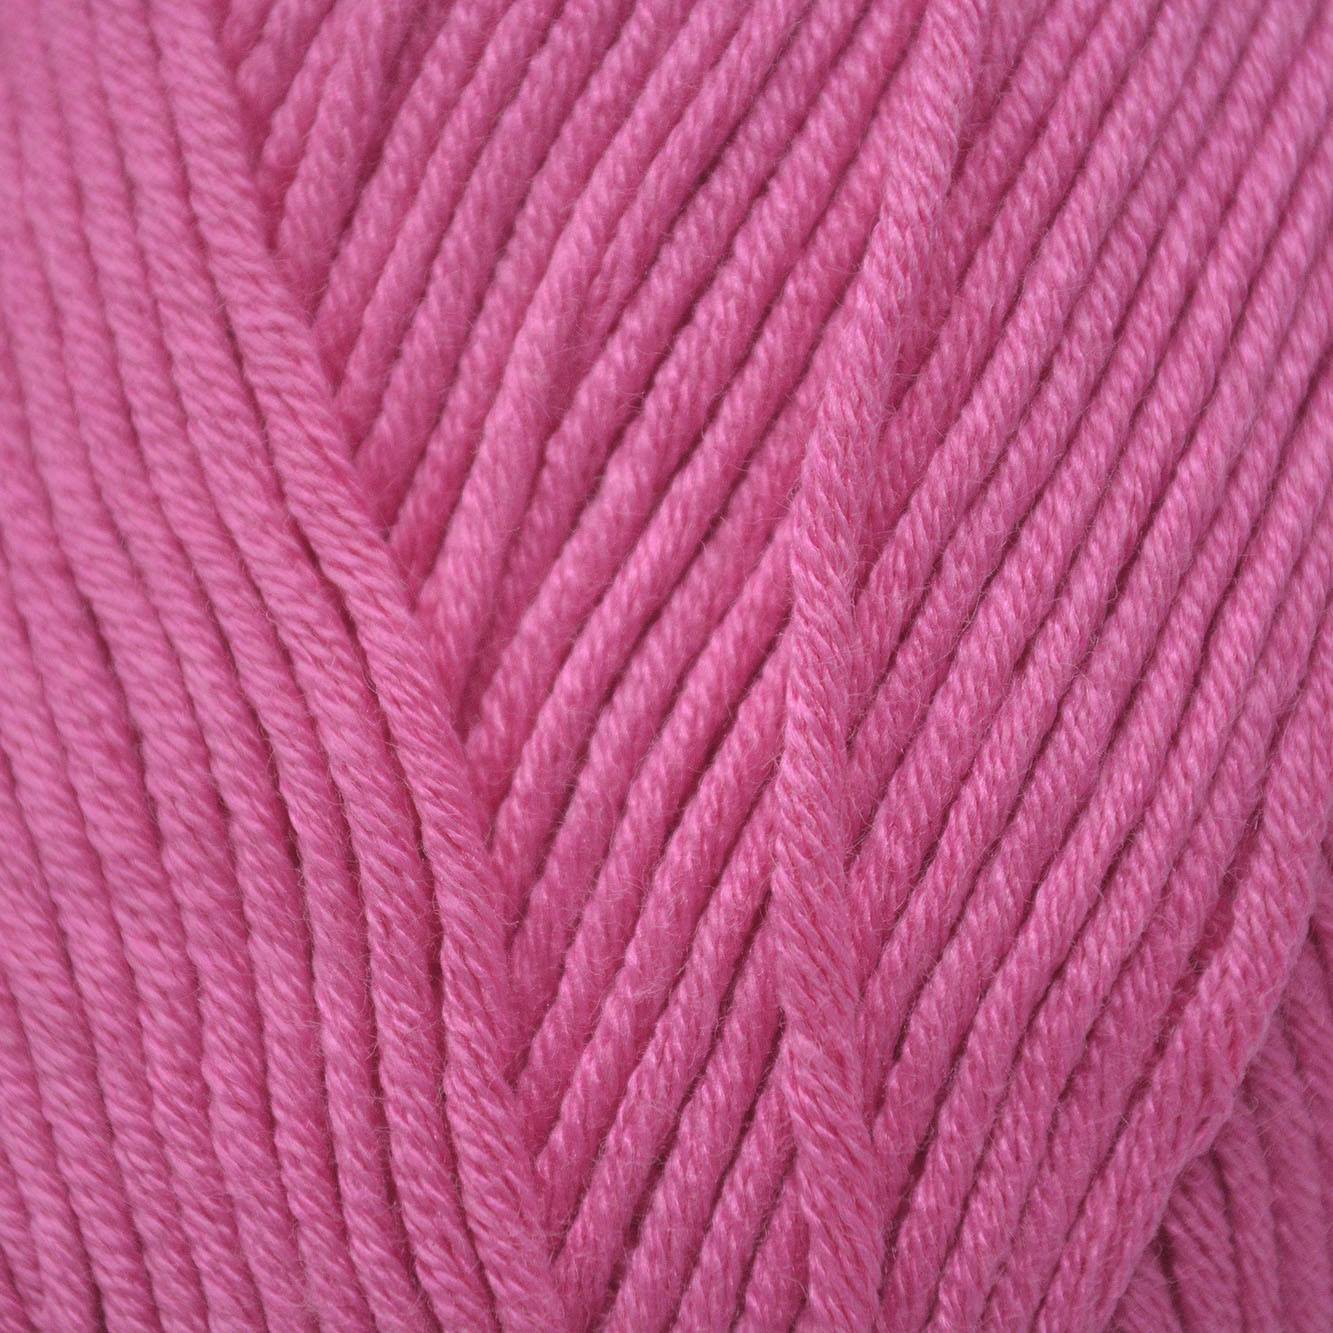 618 Dusty Pink King Cole BAMBOO Cotton DK Knitting Wool Yarn 100g 